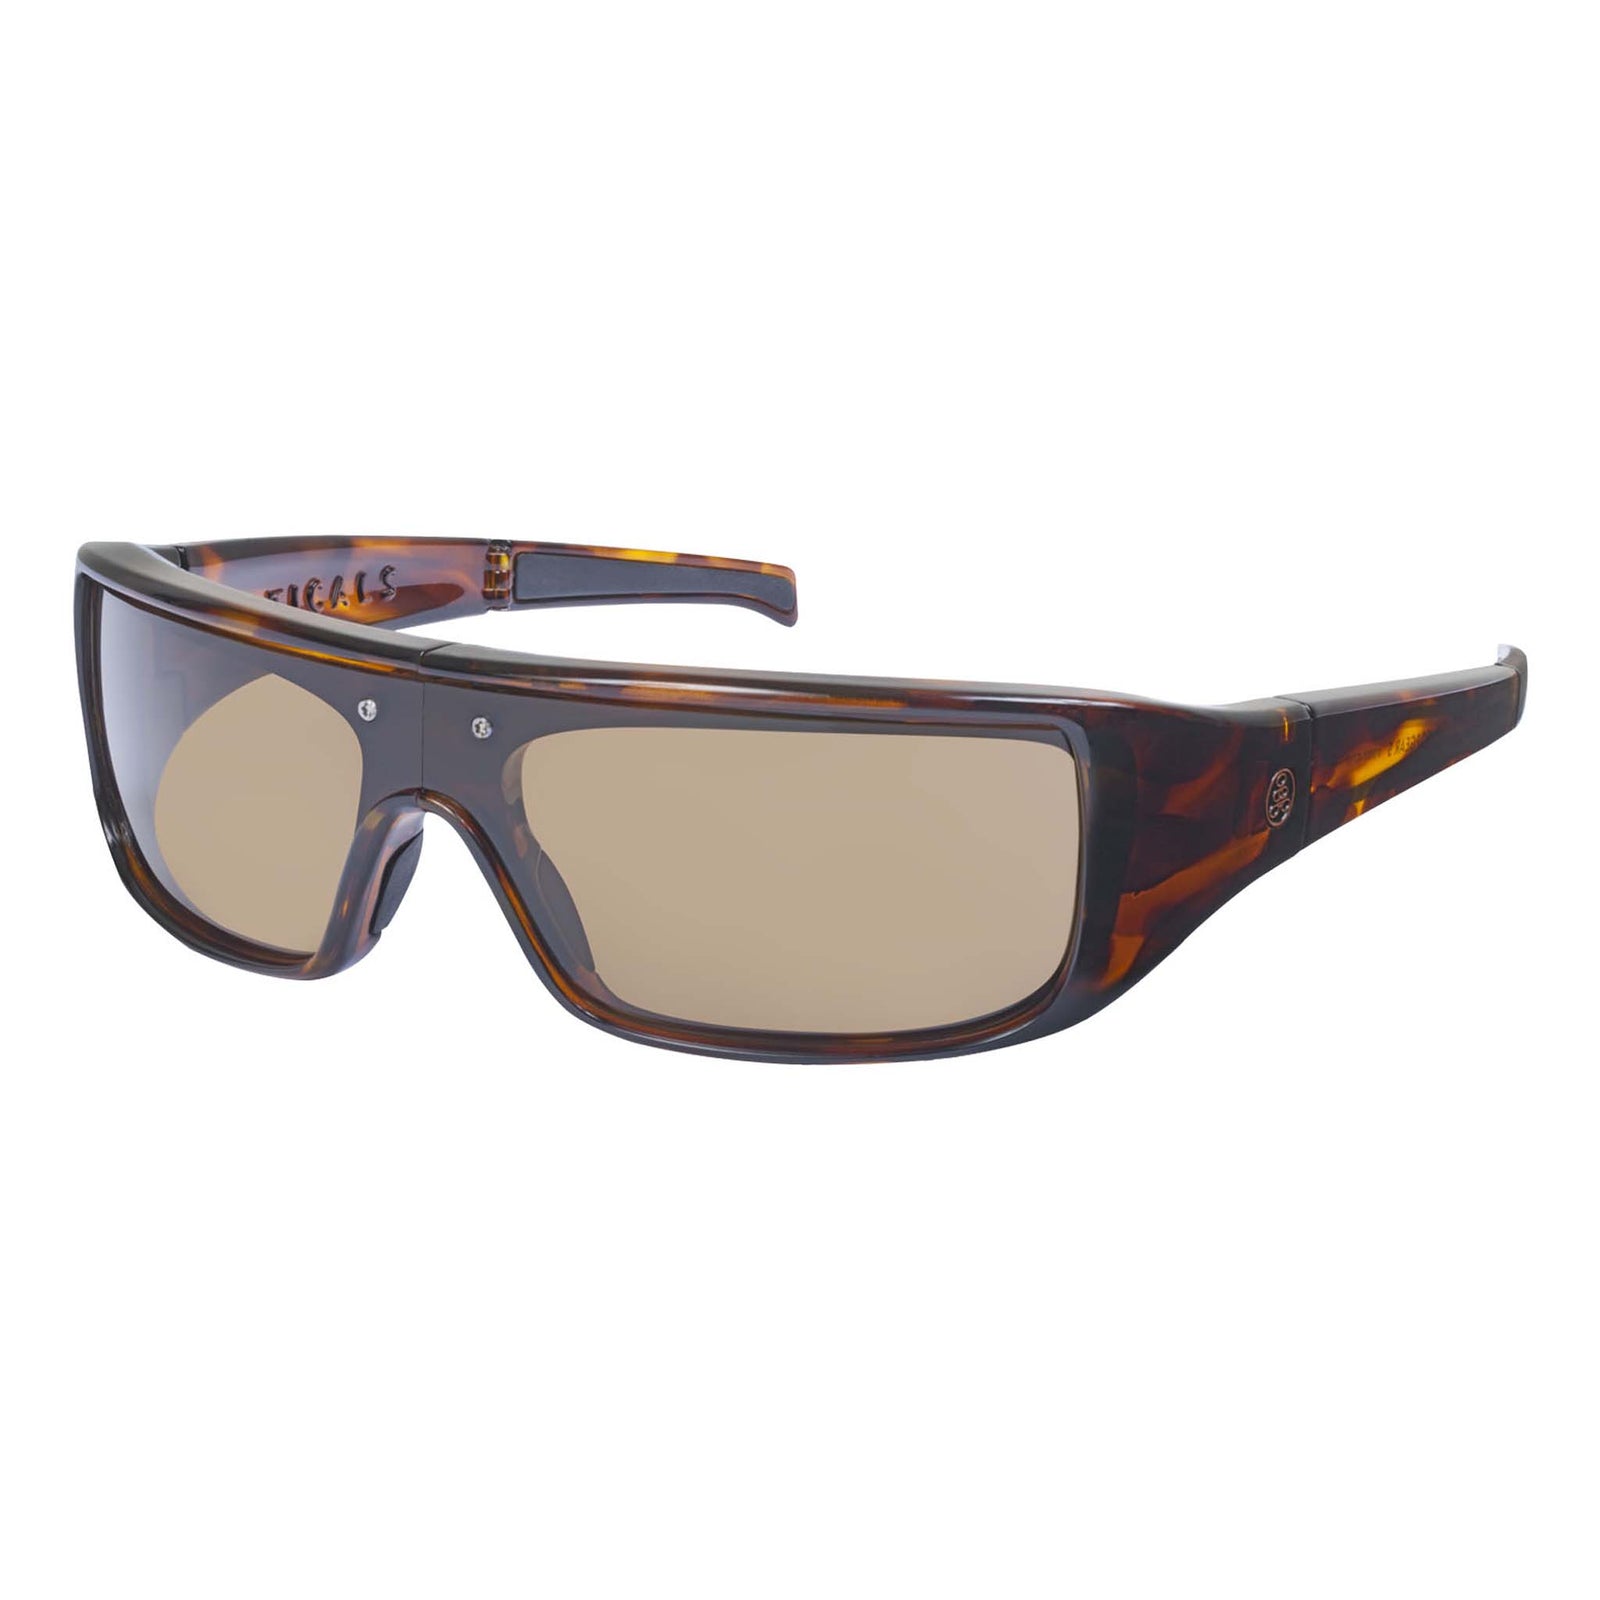 Popticals, Premium Compact Sunglasses, PopGear, 010051-CTNP, Polarized Sunglasses, Gloss Tortoise Frame , Brown Lenses, Glam View